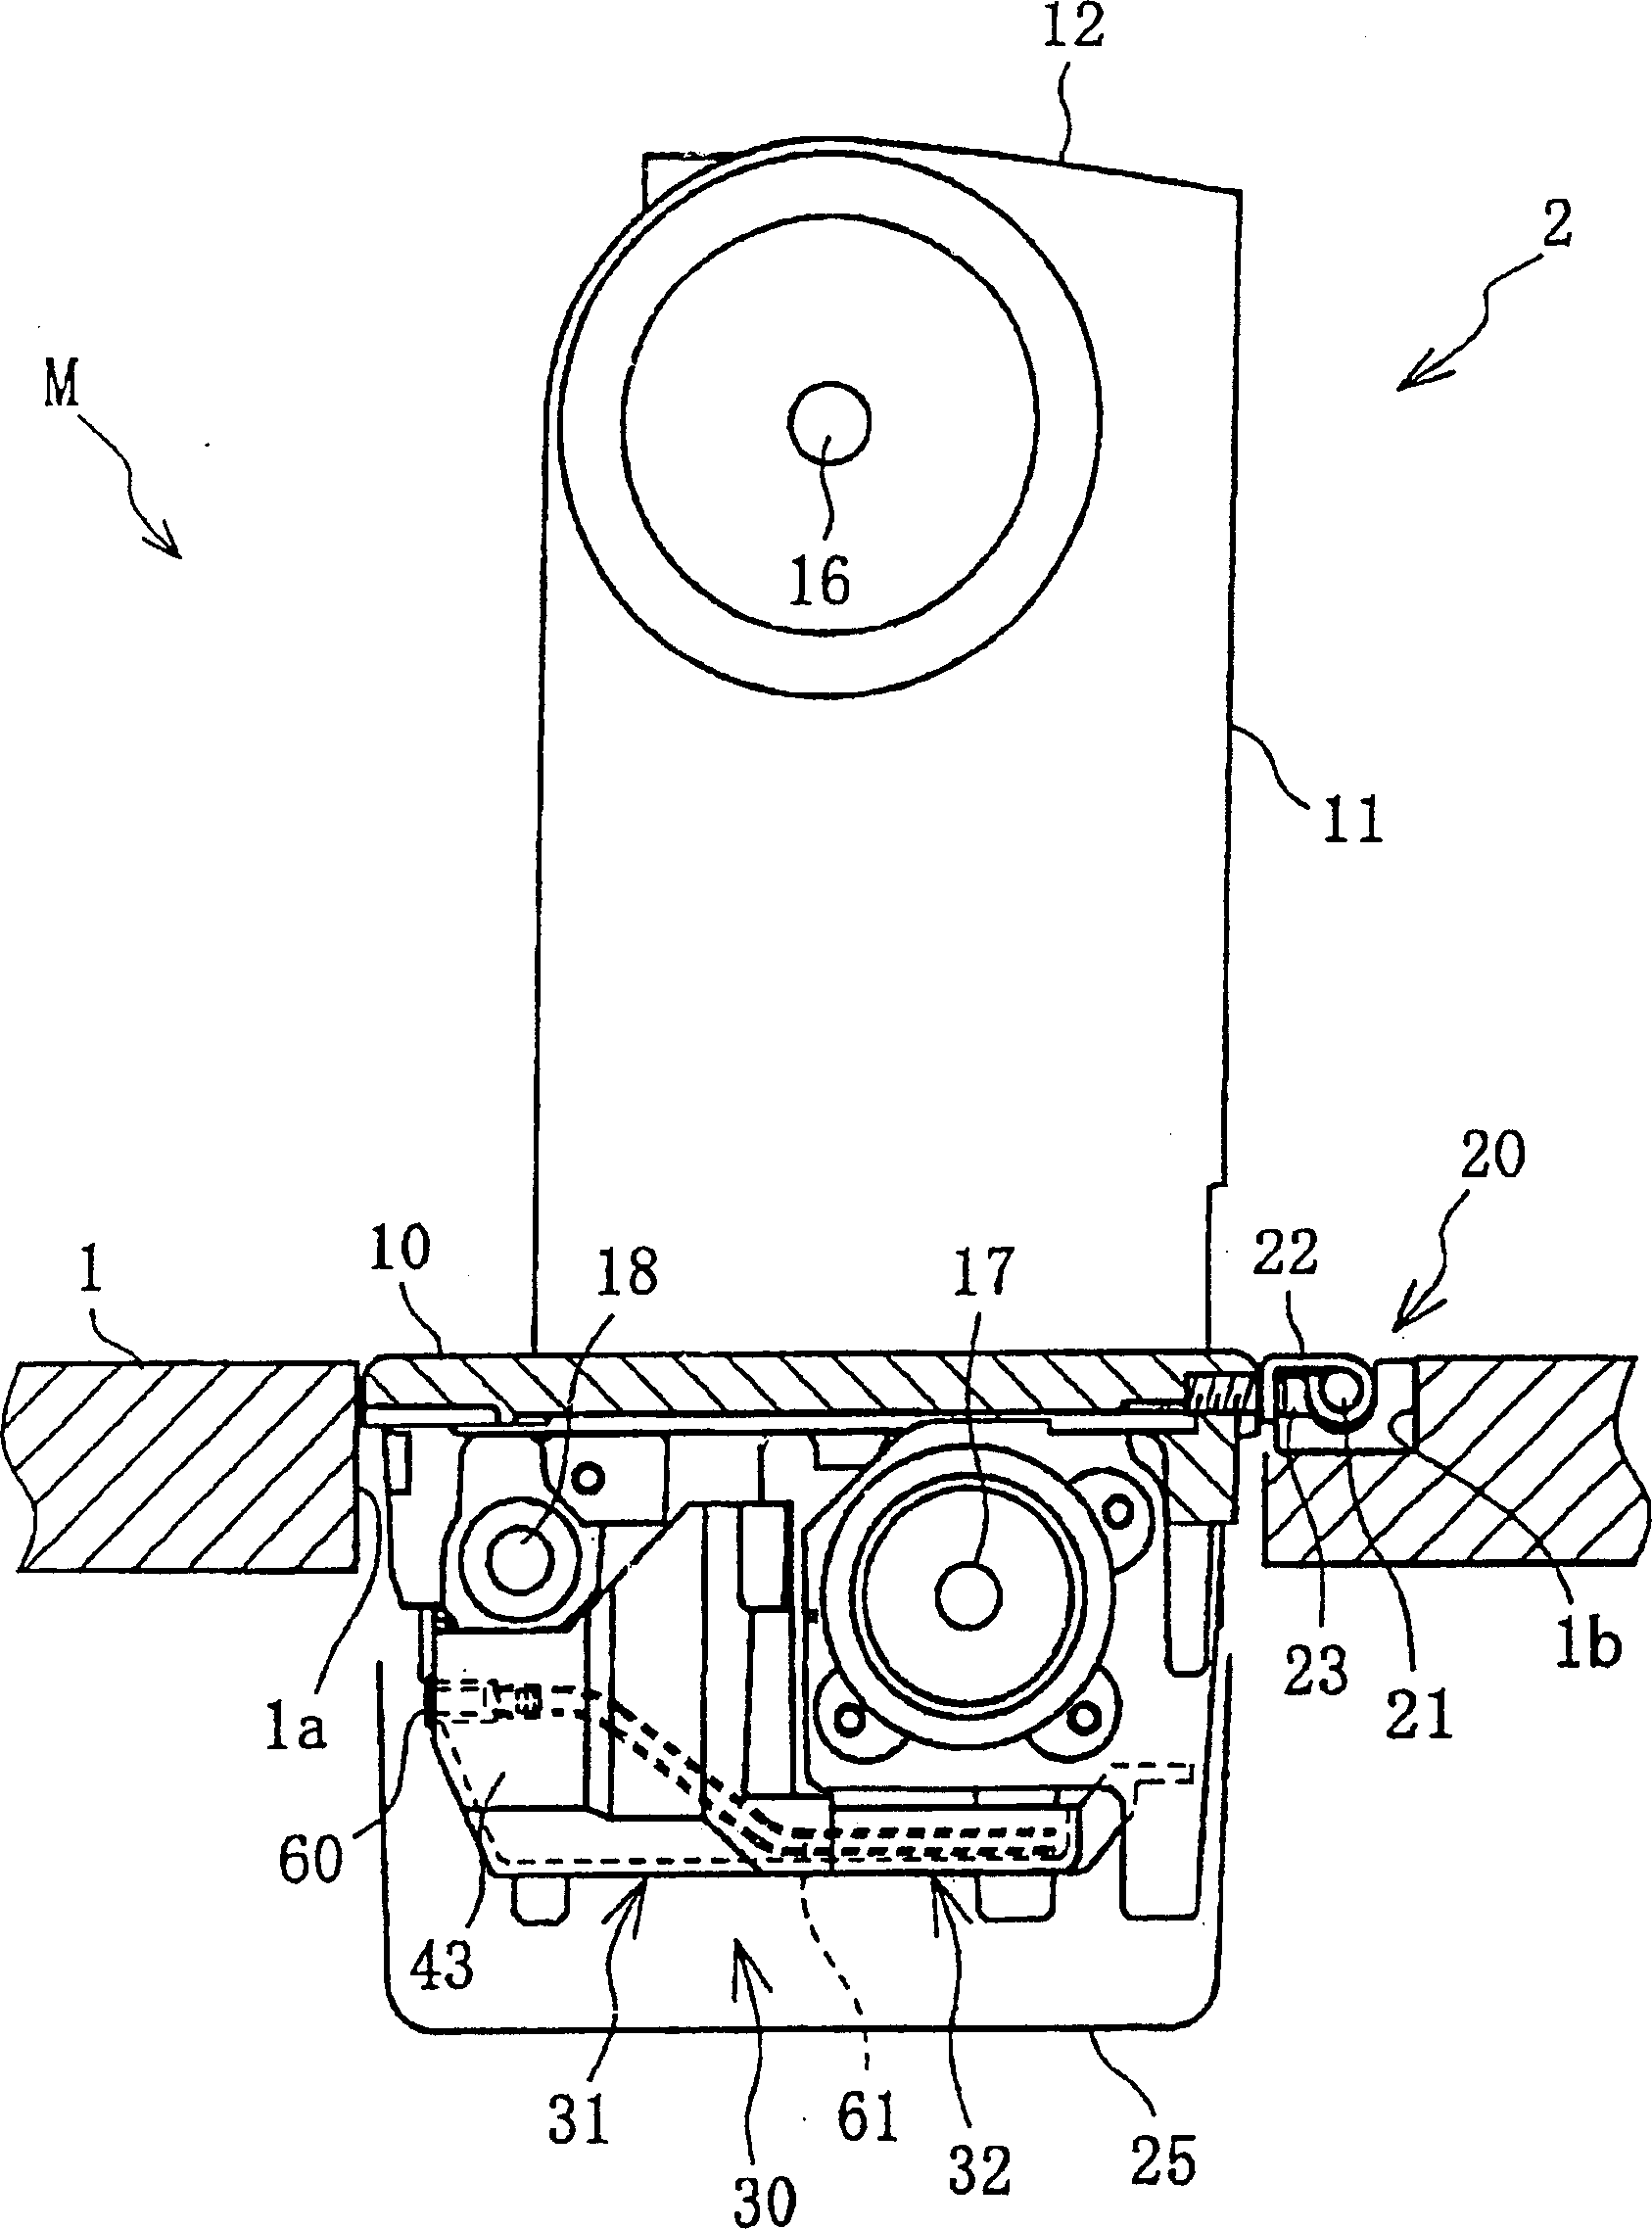 Oil box of sewing machine